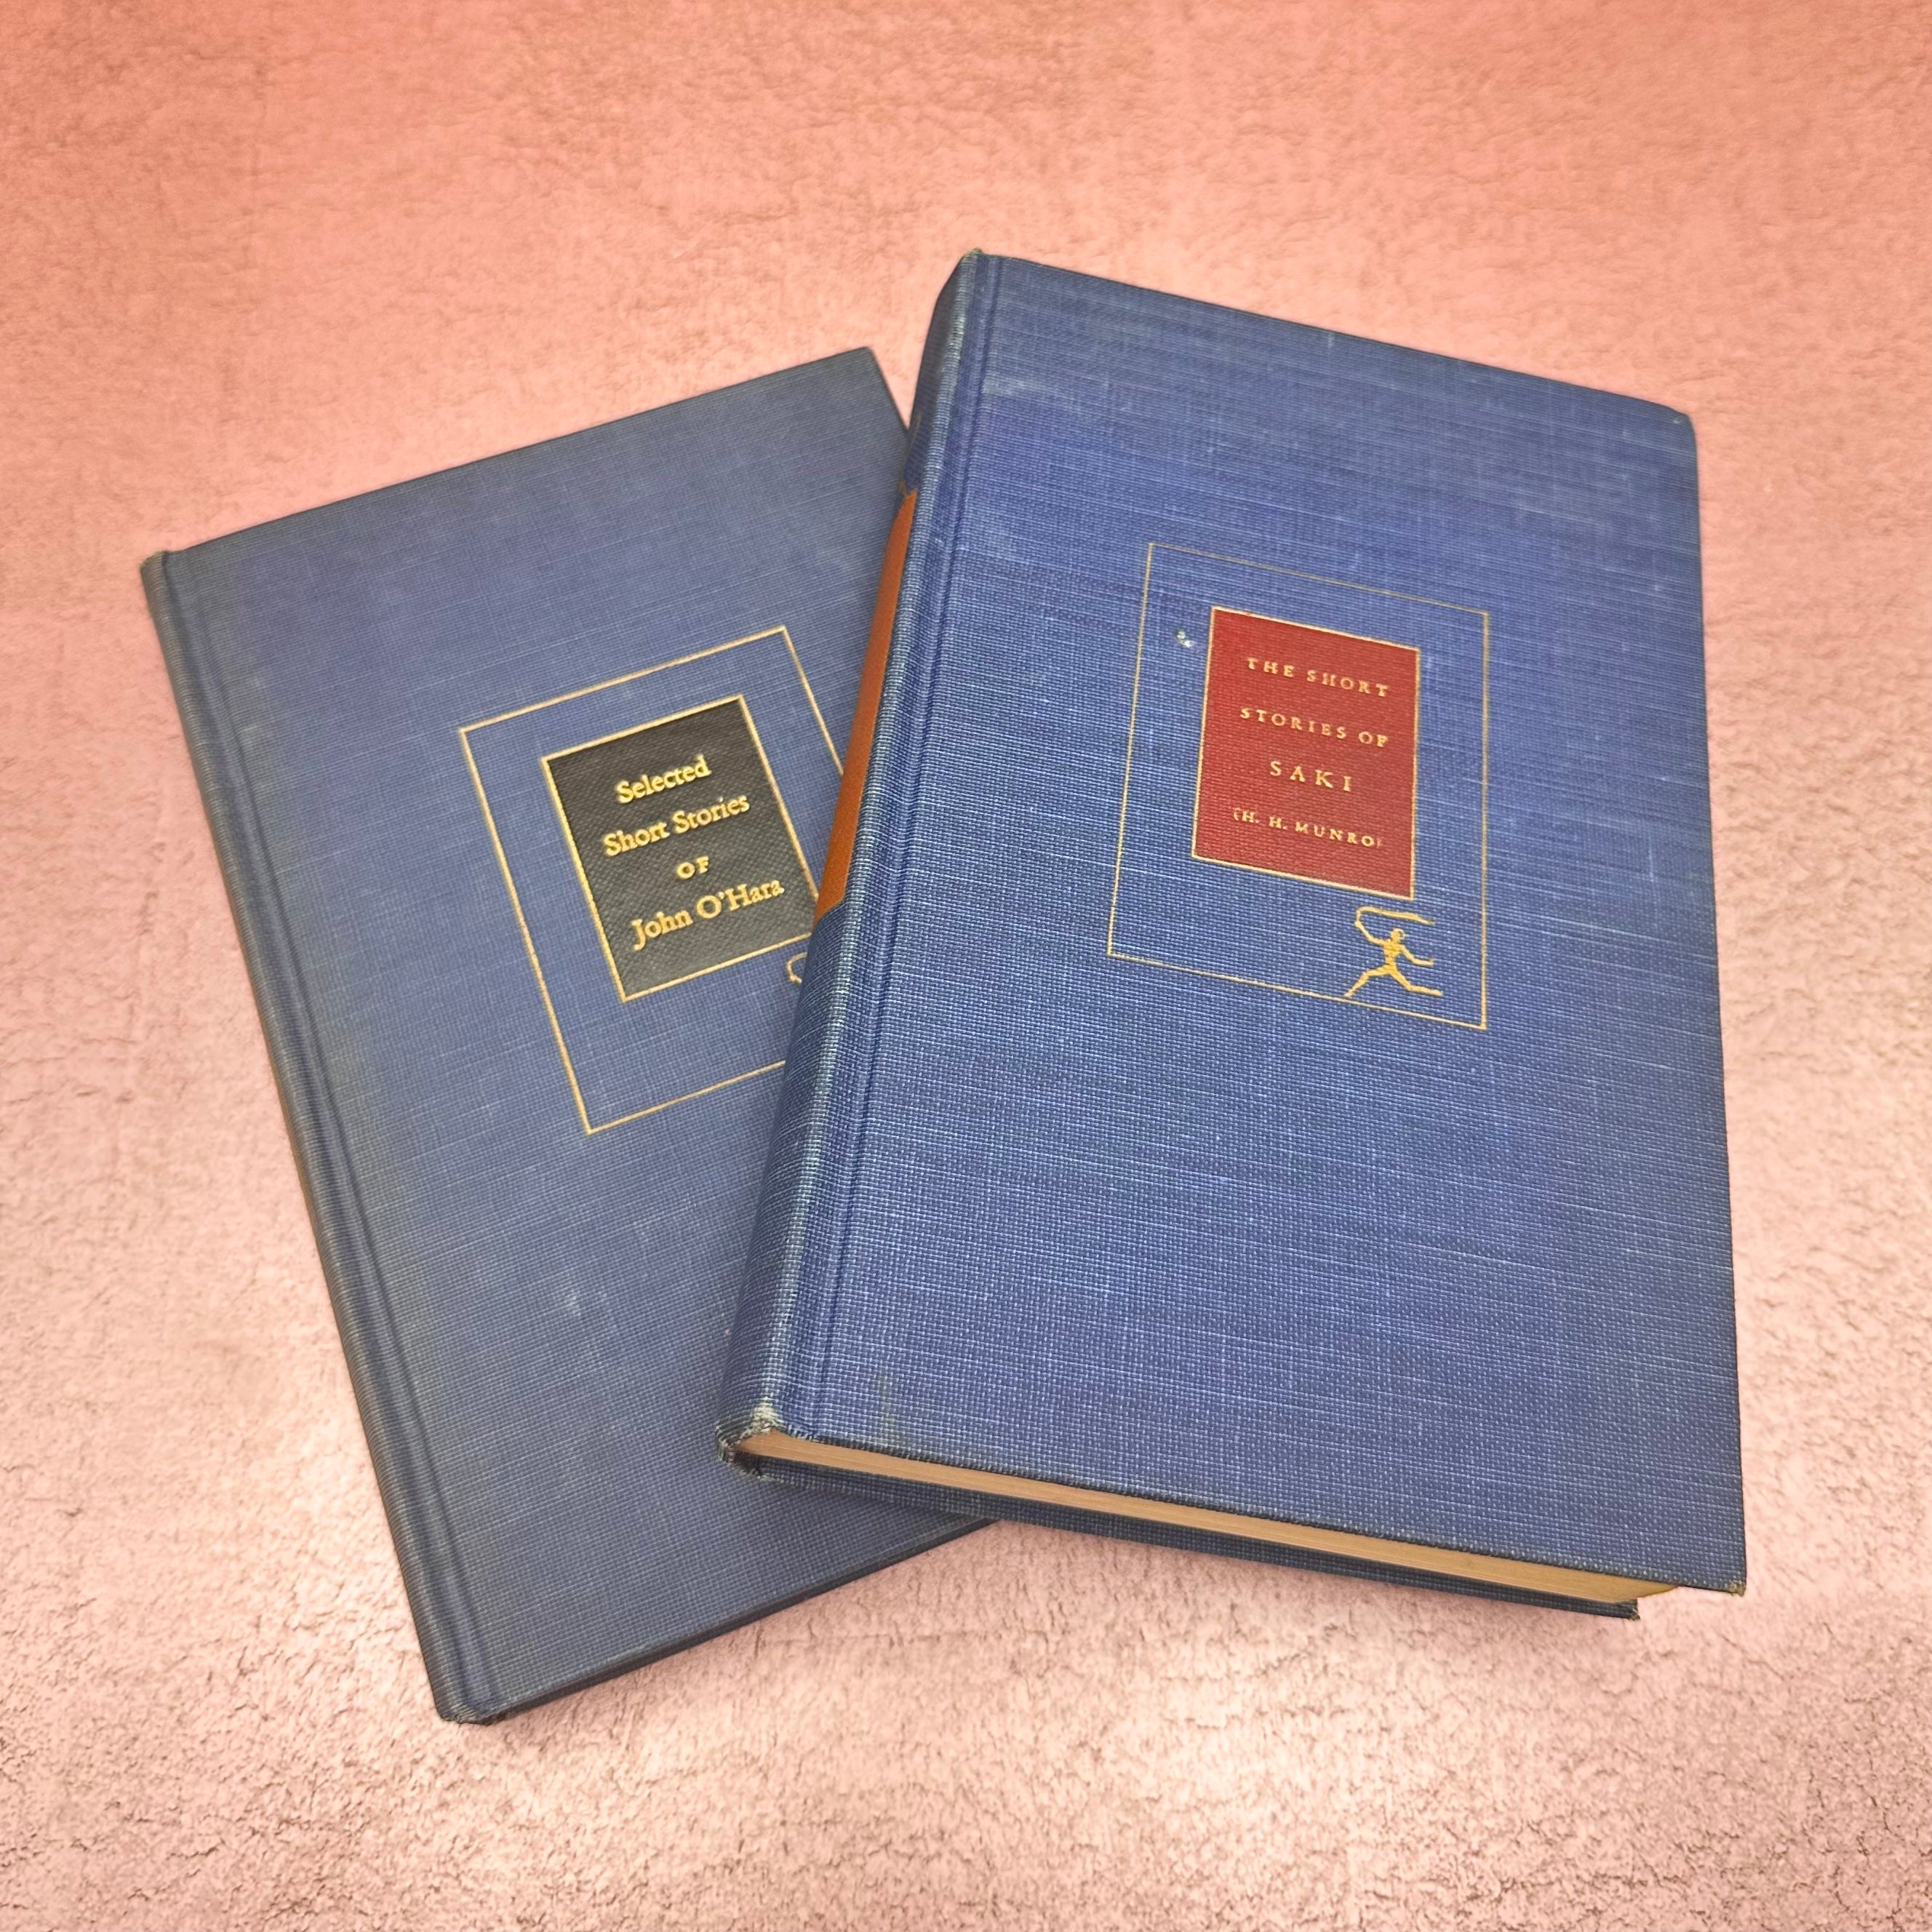 Vintage Blue books